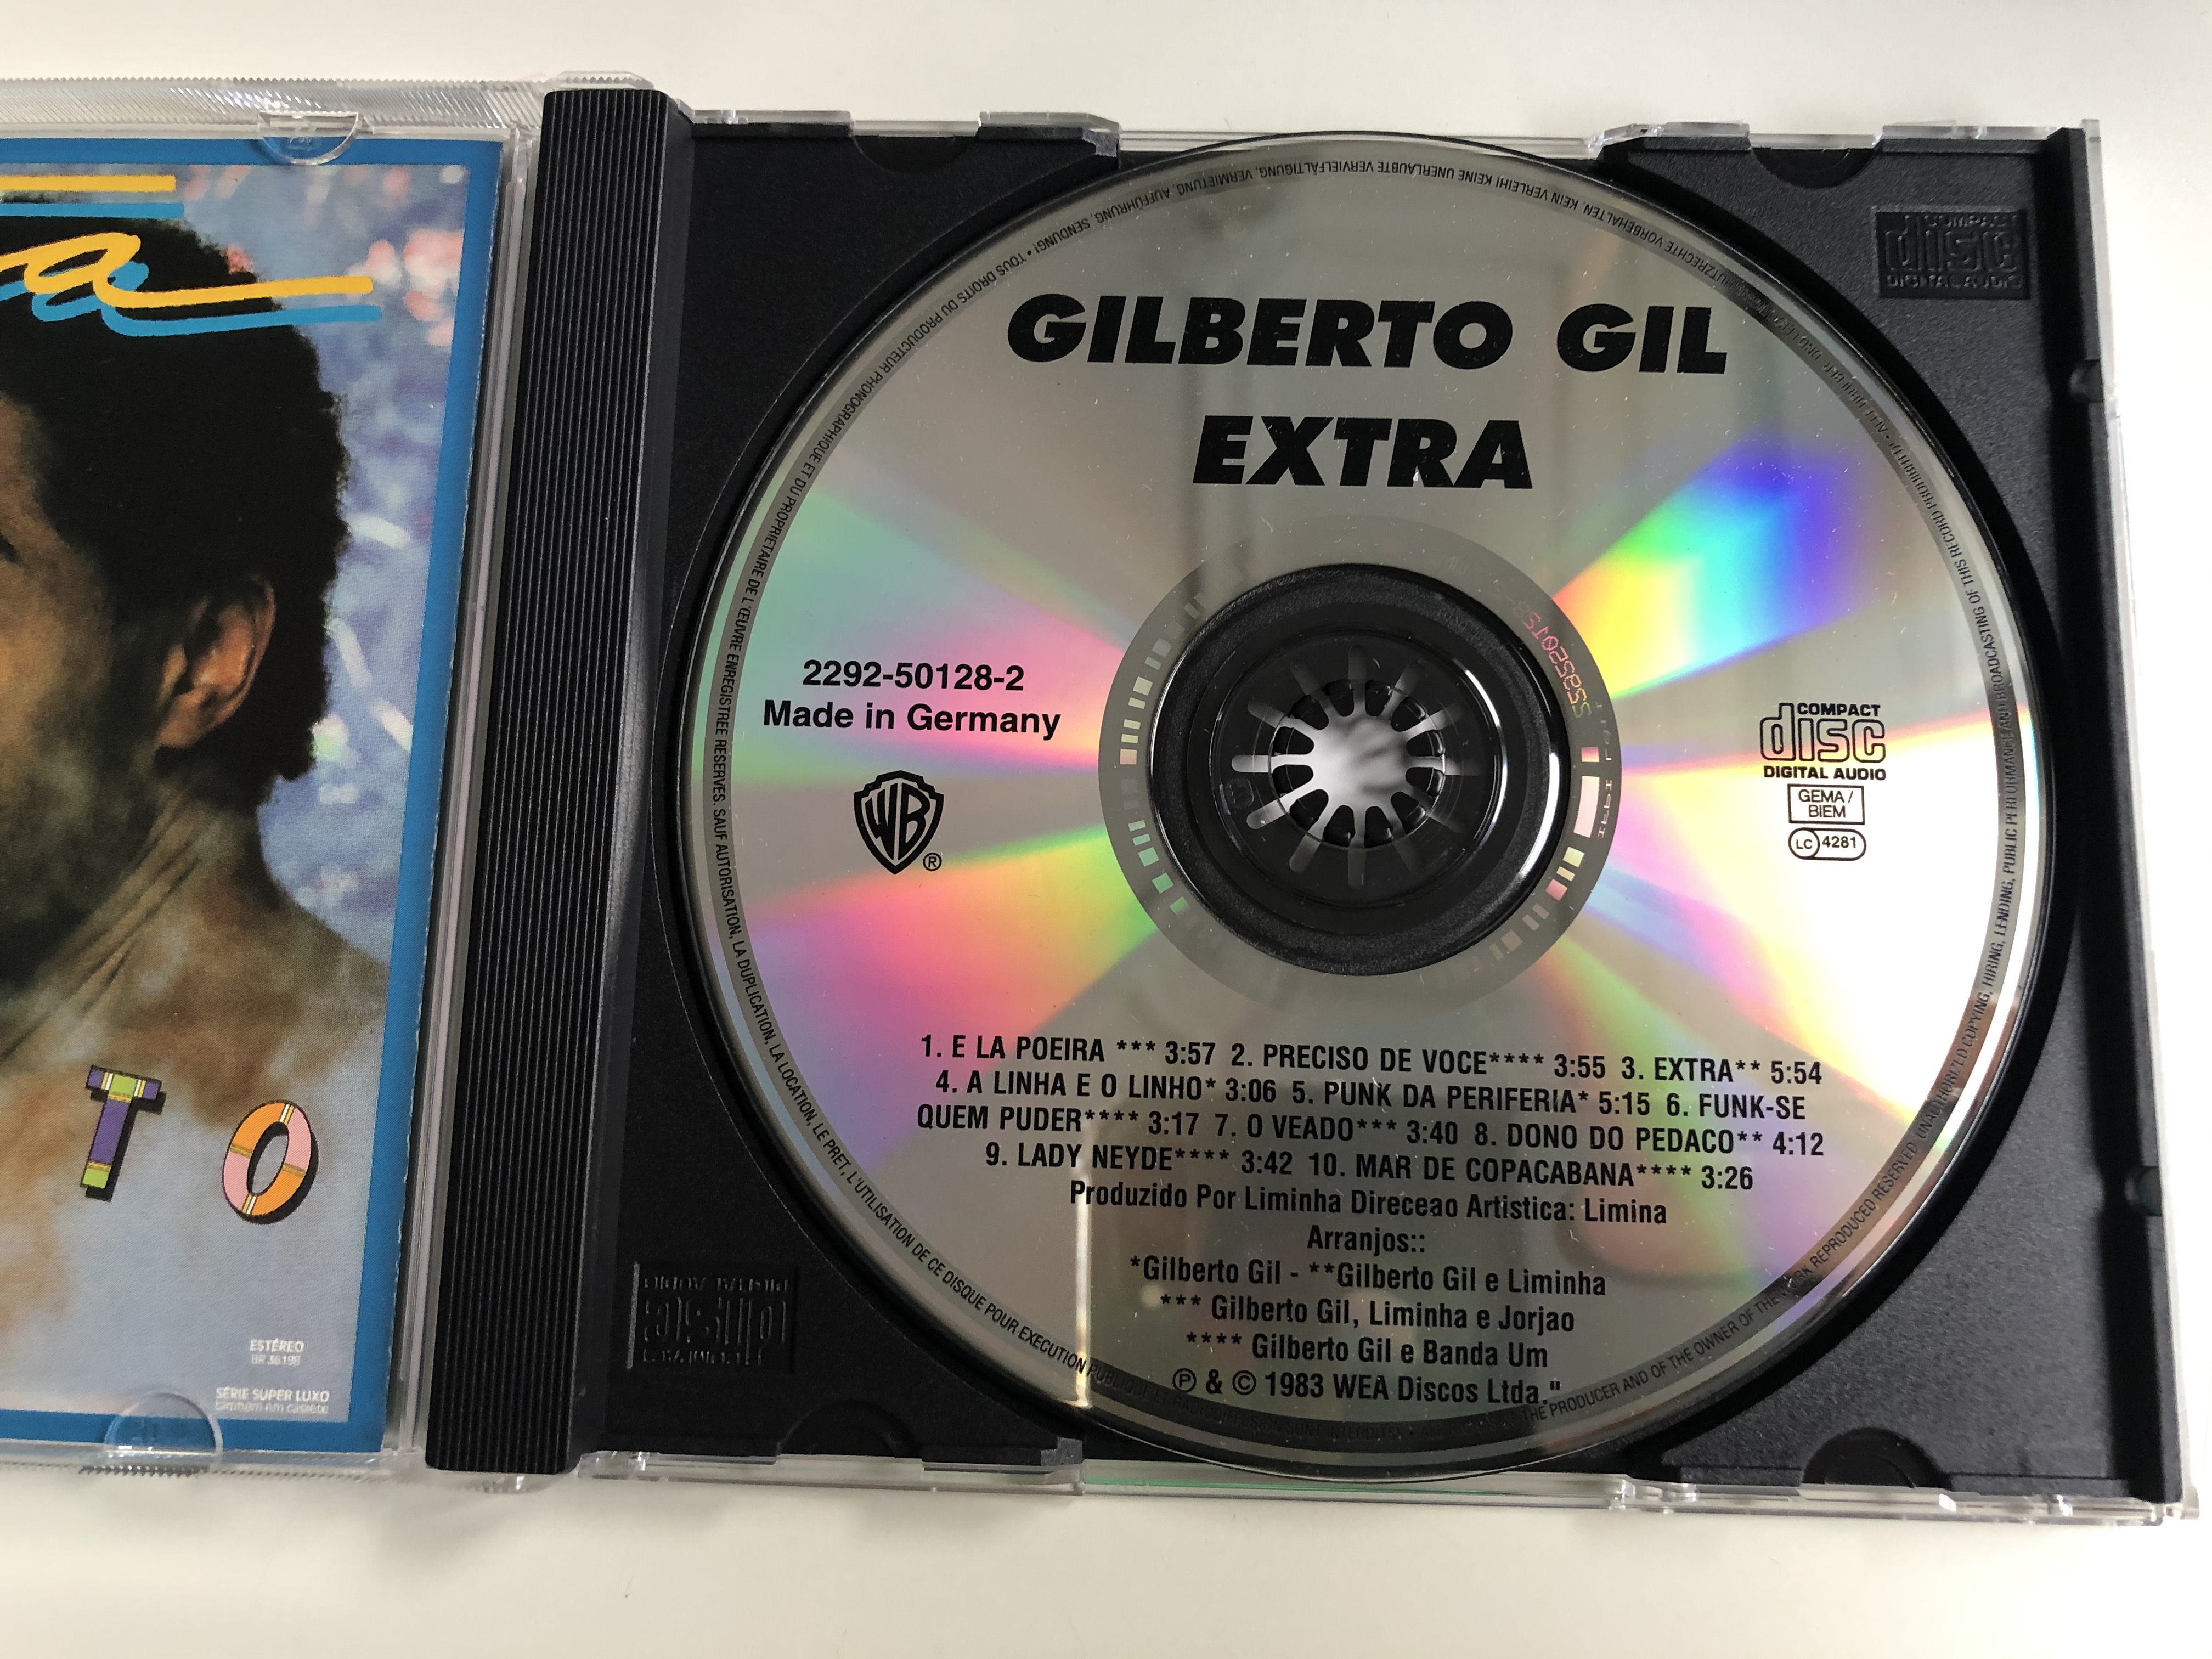 extra-gilberto-gil-warner-bros.-records-audio-cd-1983-2292-50128-2-4-.jpg